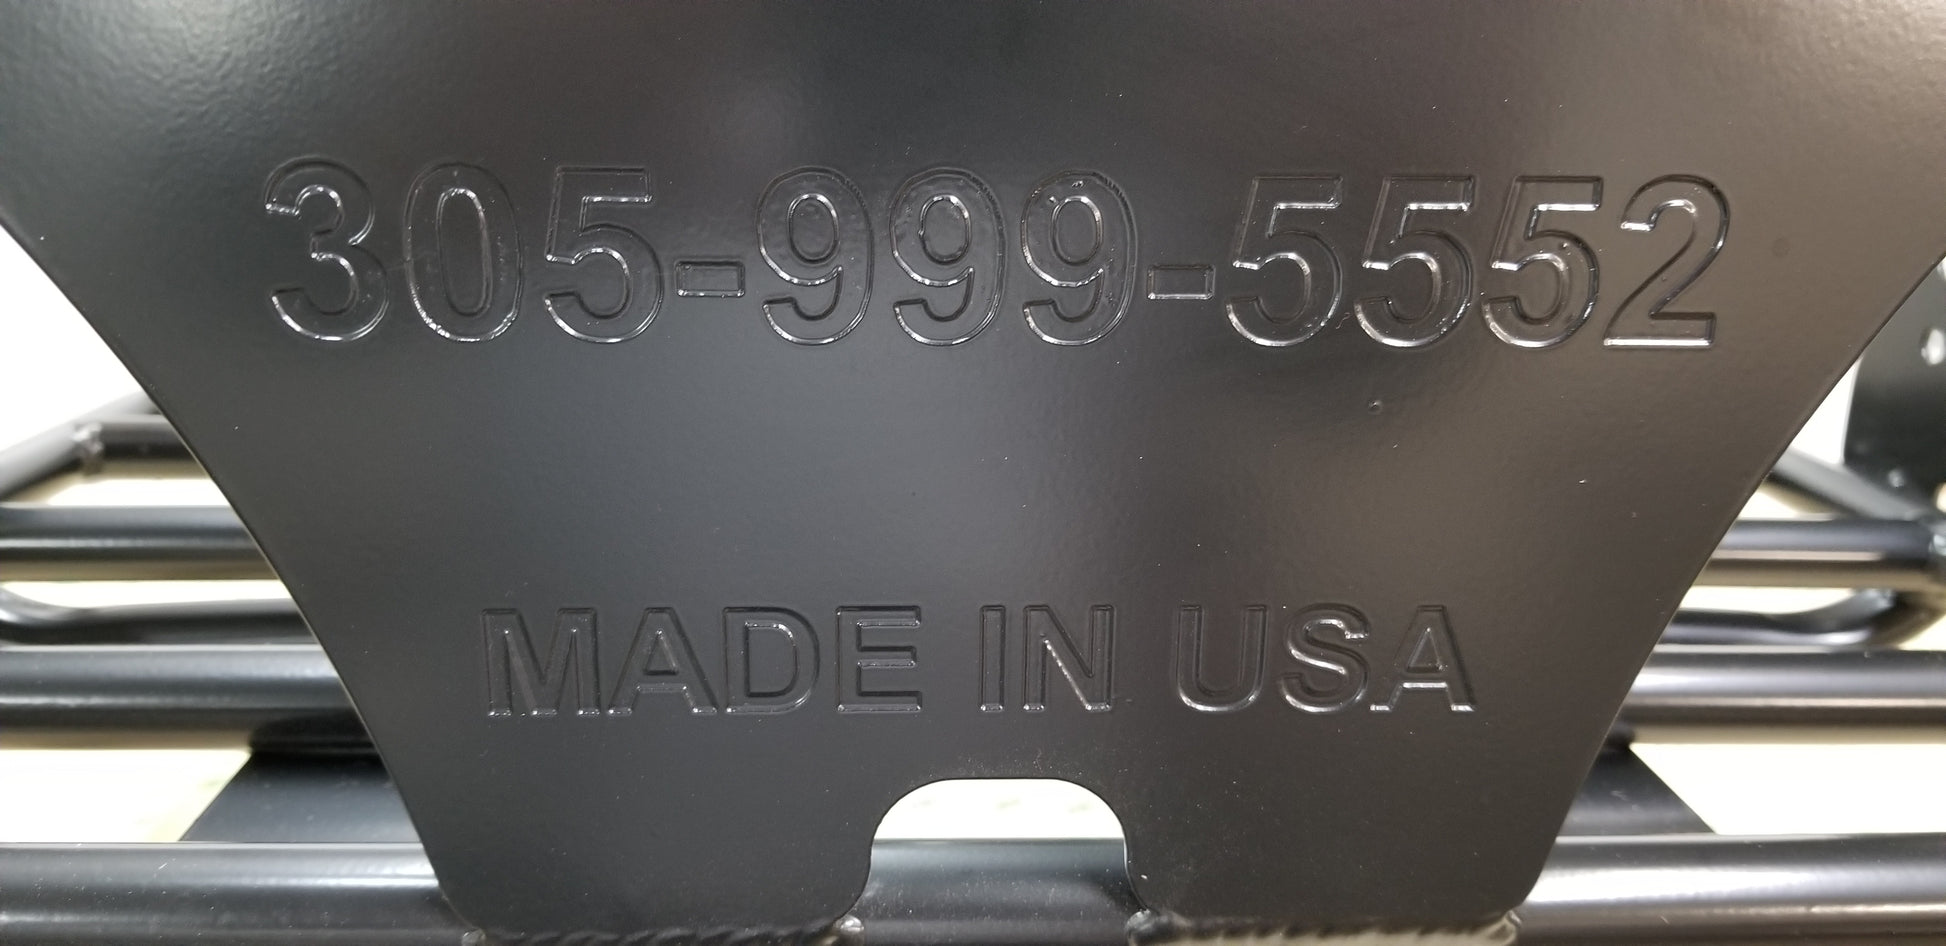 Made in USA seadoo racks | PWC Super Rack